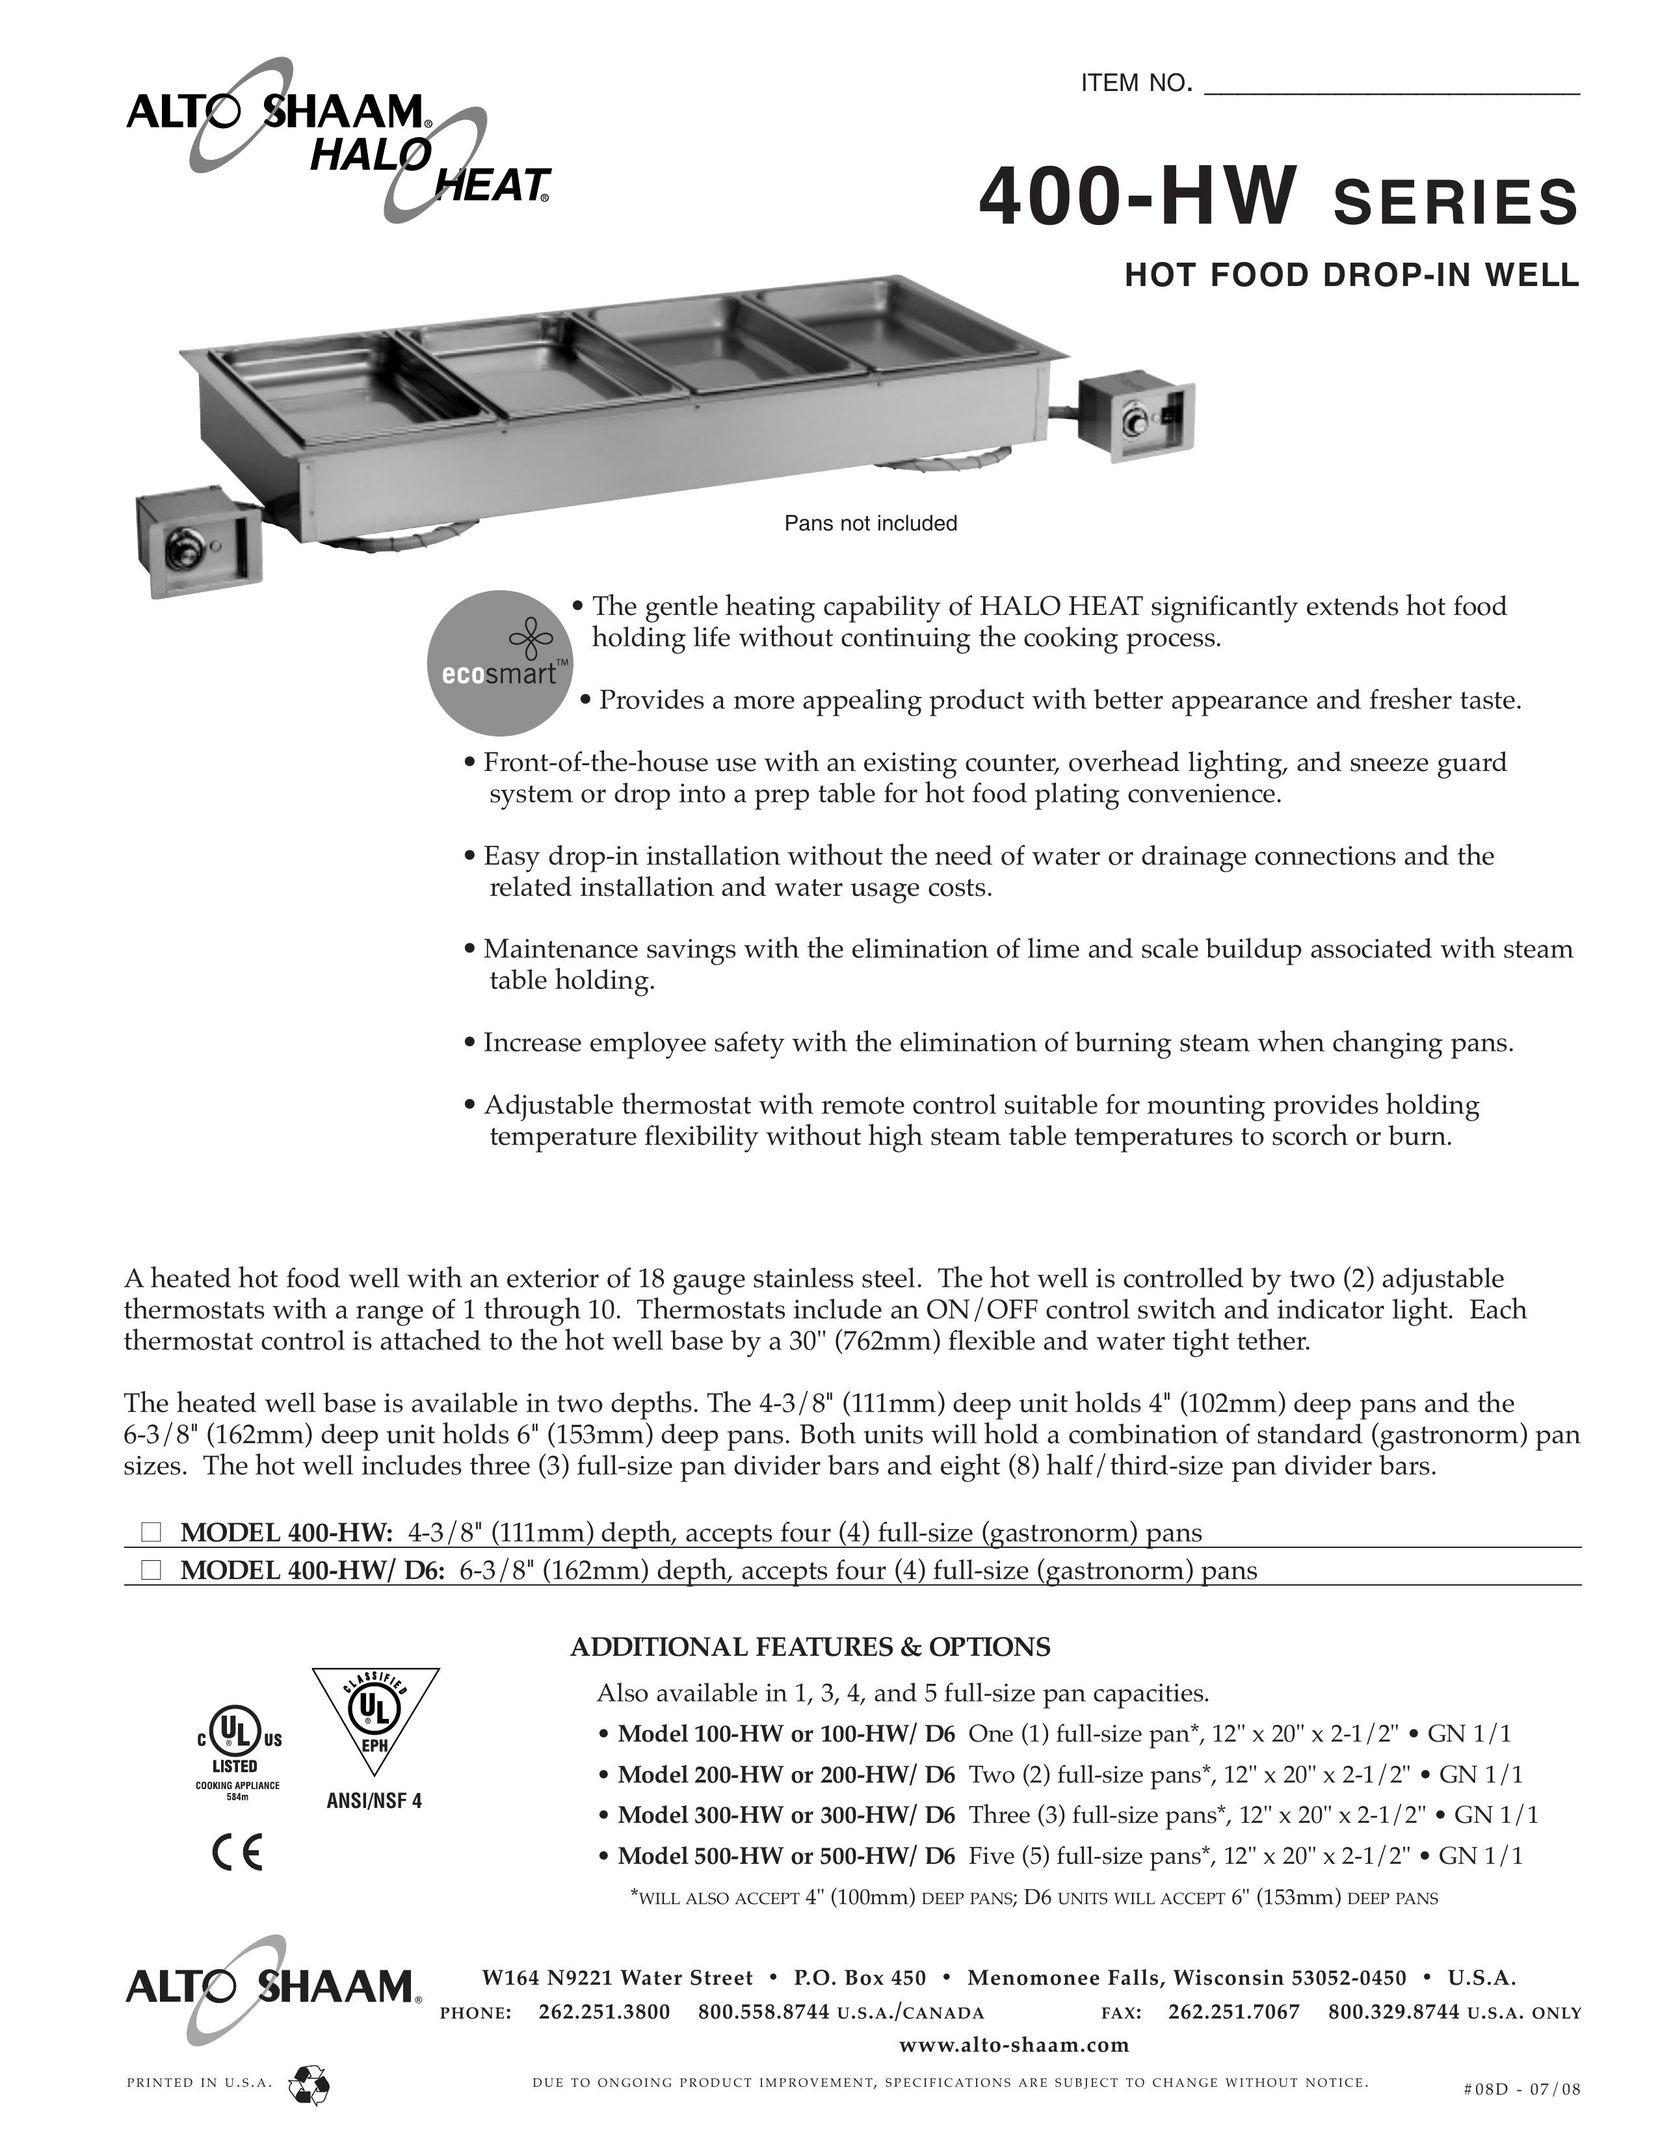 Alto-Shaam 400-HW/ D6 Food Warmer User Manual